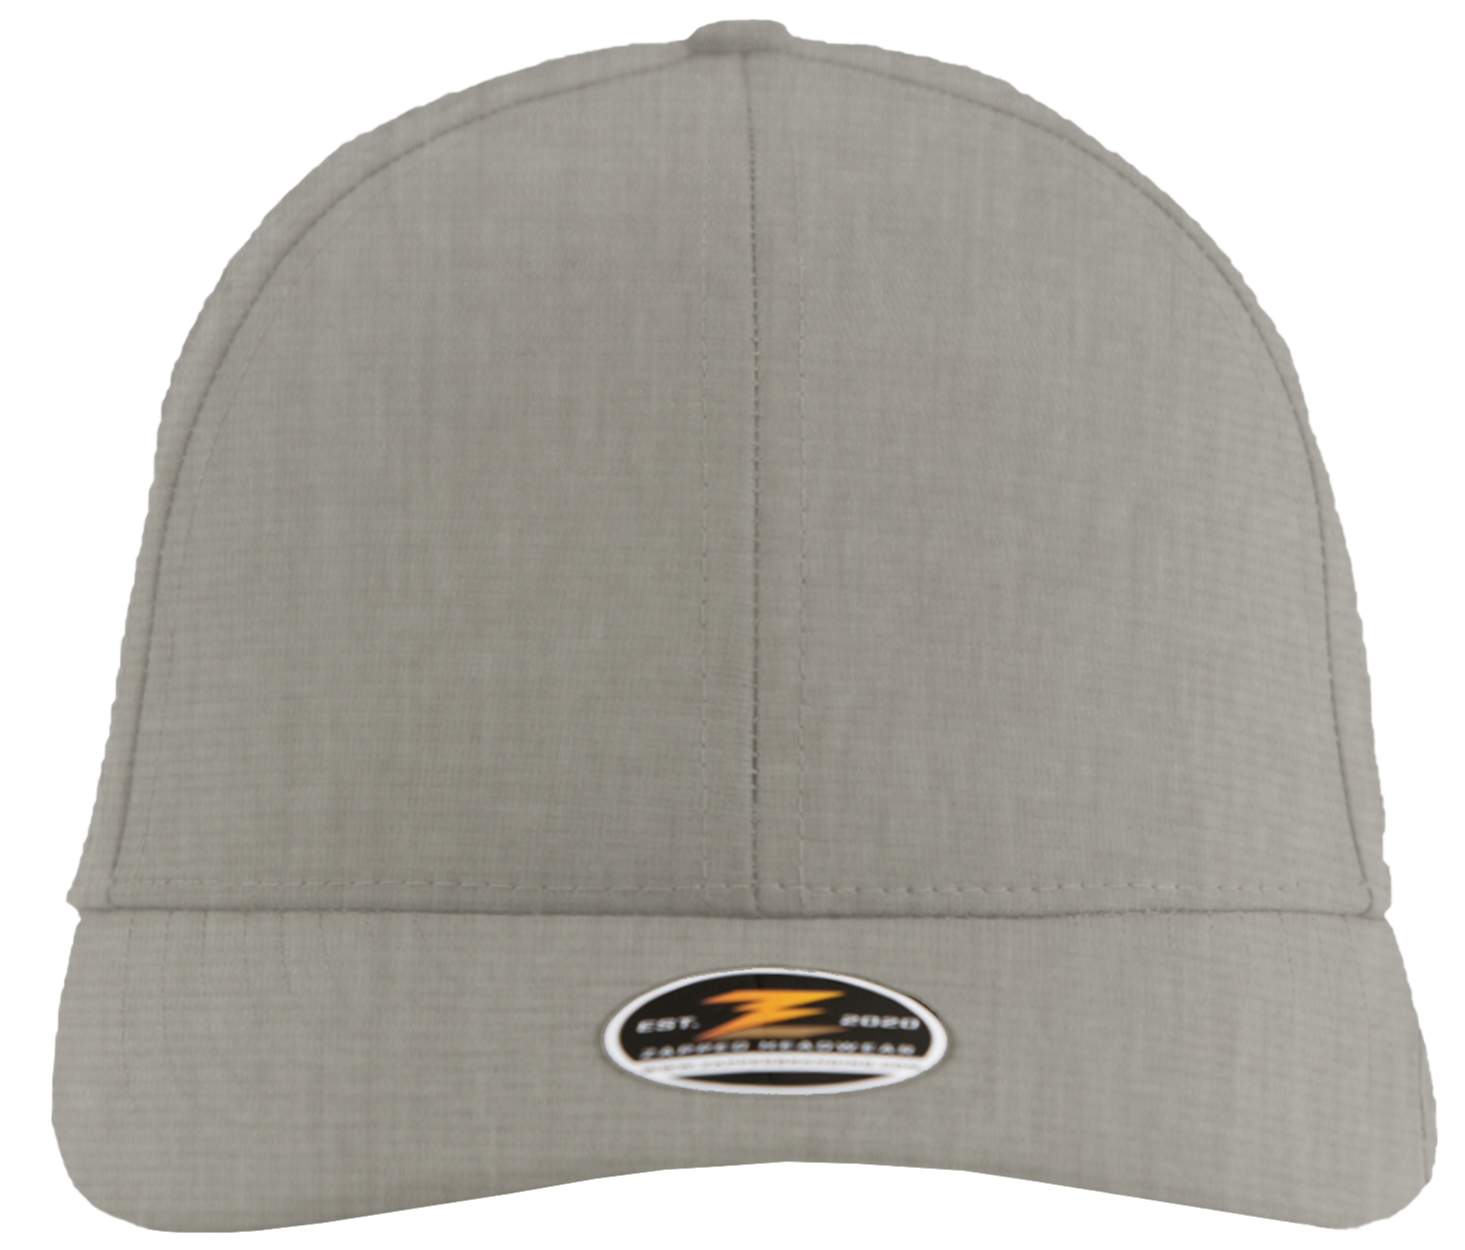 apache heather grey 6 panel snapback hat